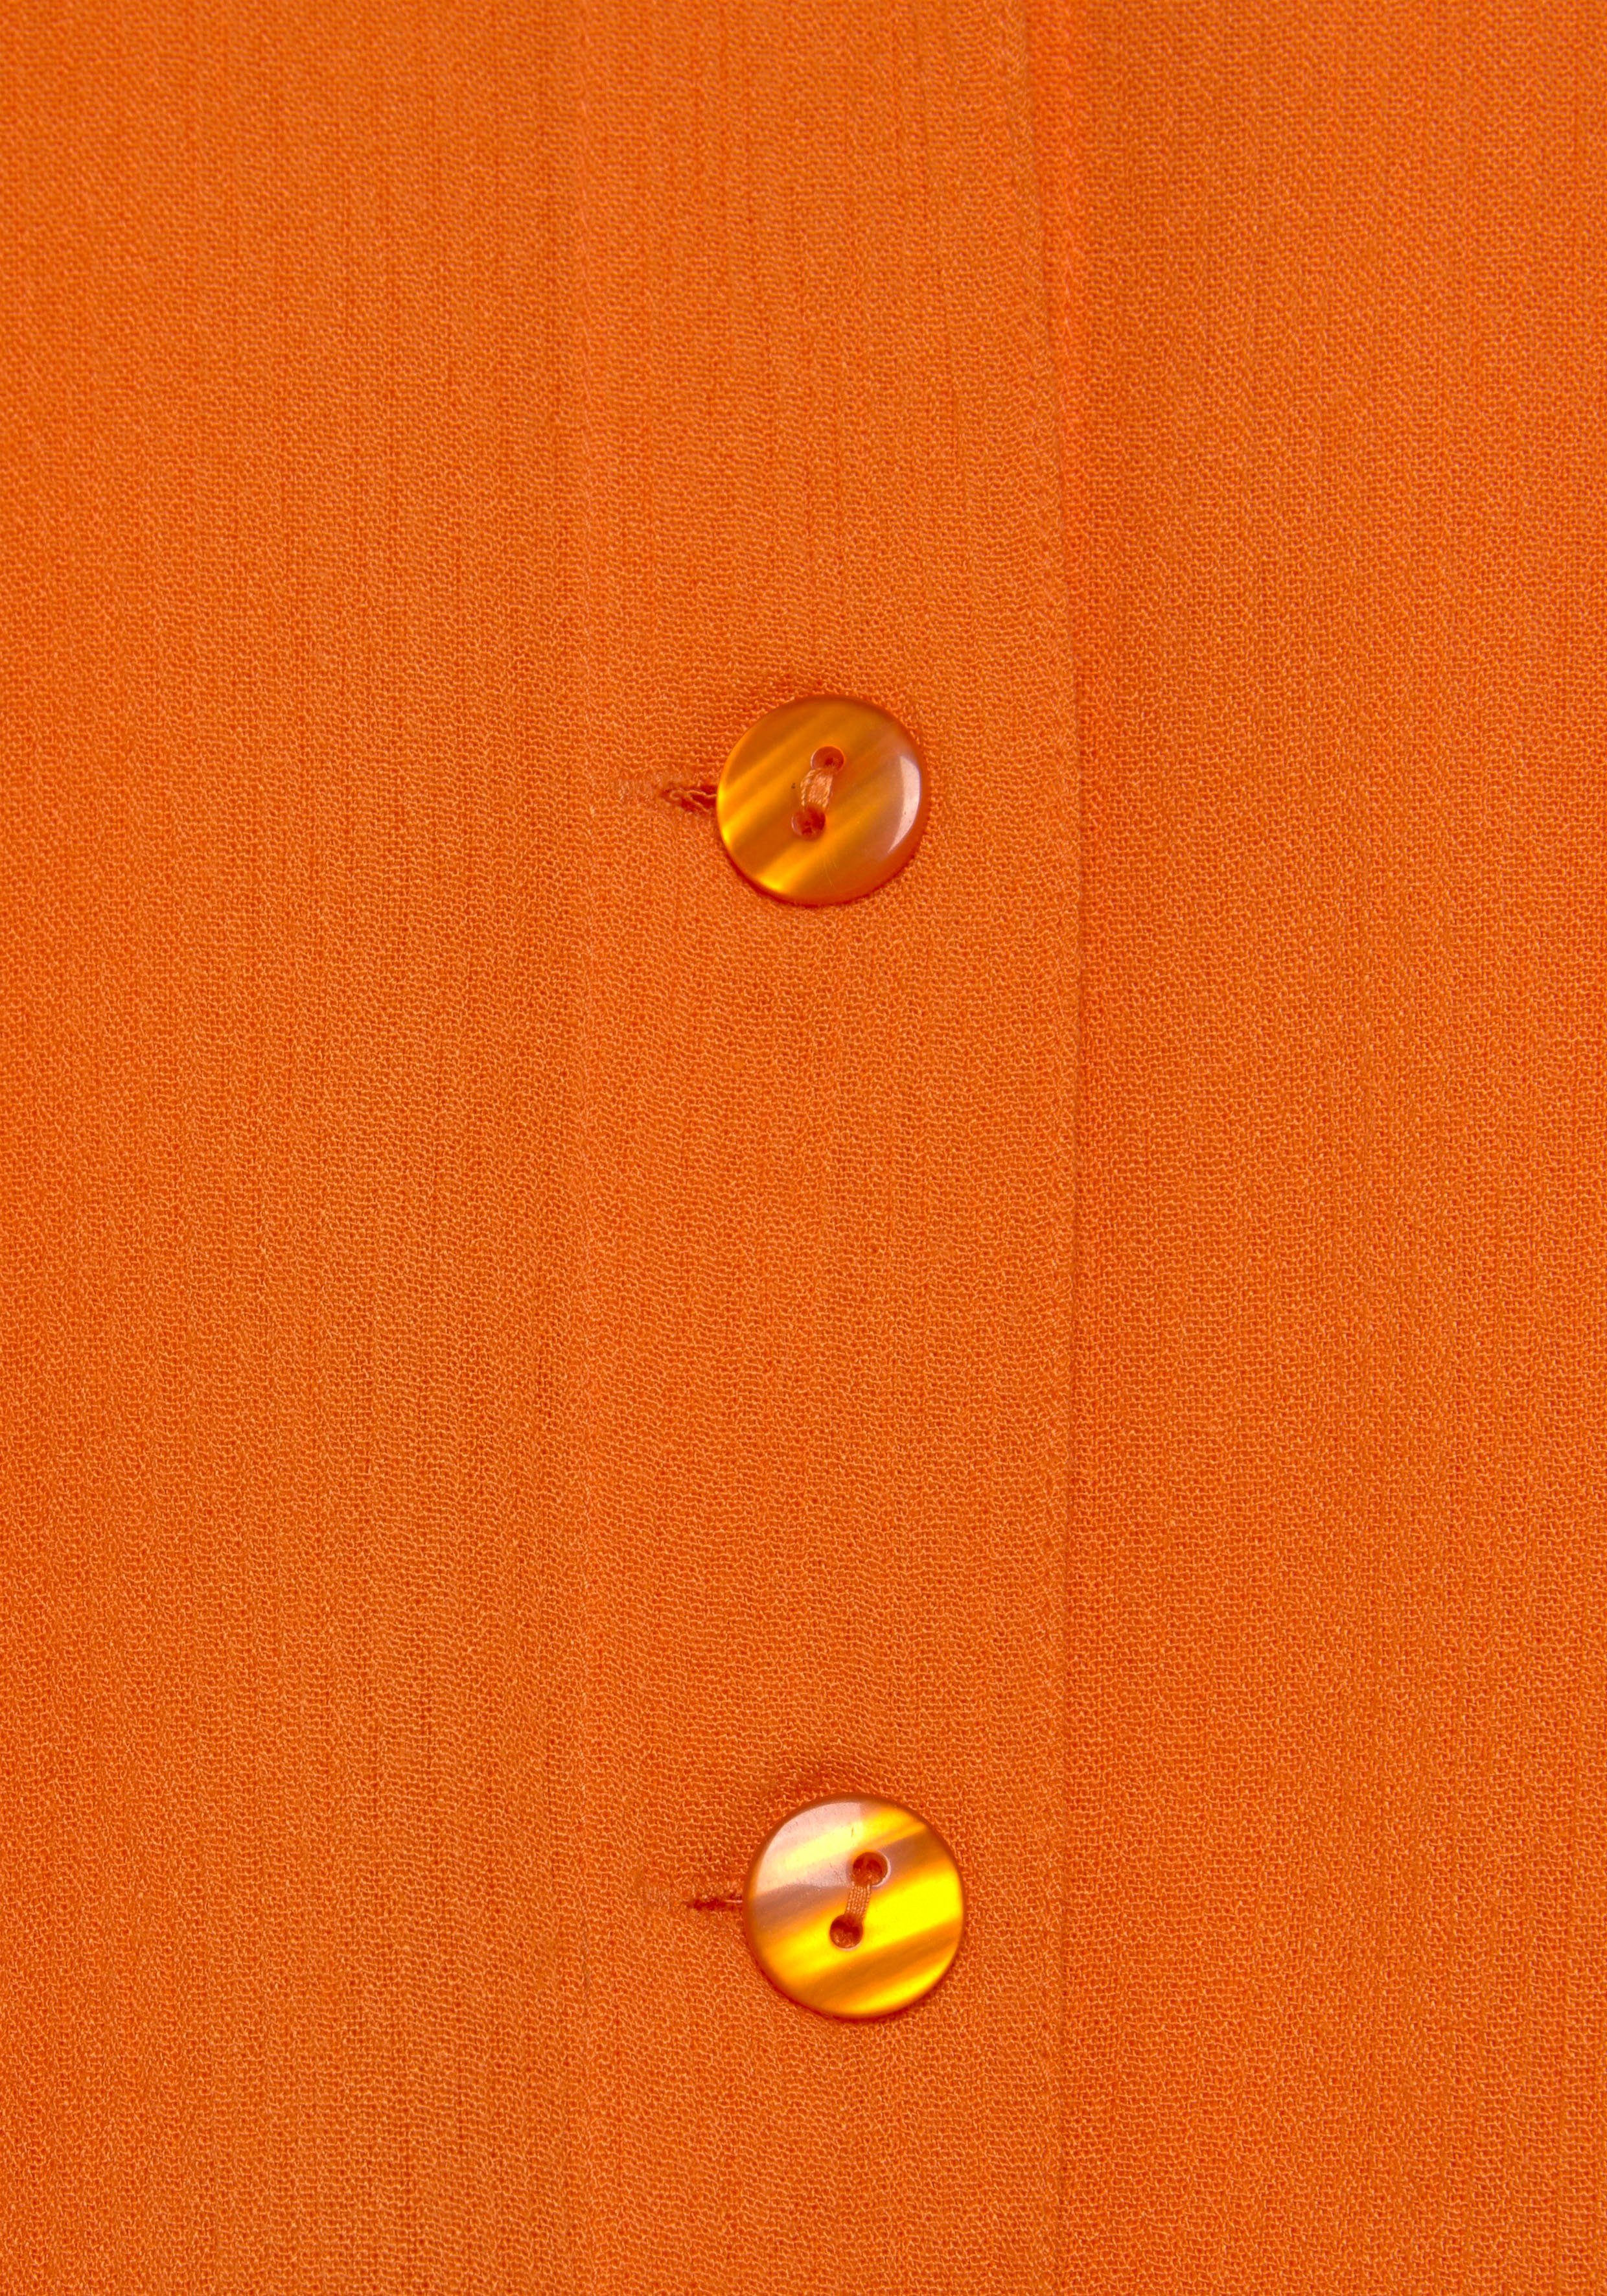 LASCANA orange Longbluse mit sommerlich Knopfleiste, Blusenkleid, Kurzarmbluse,